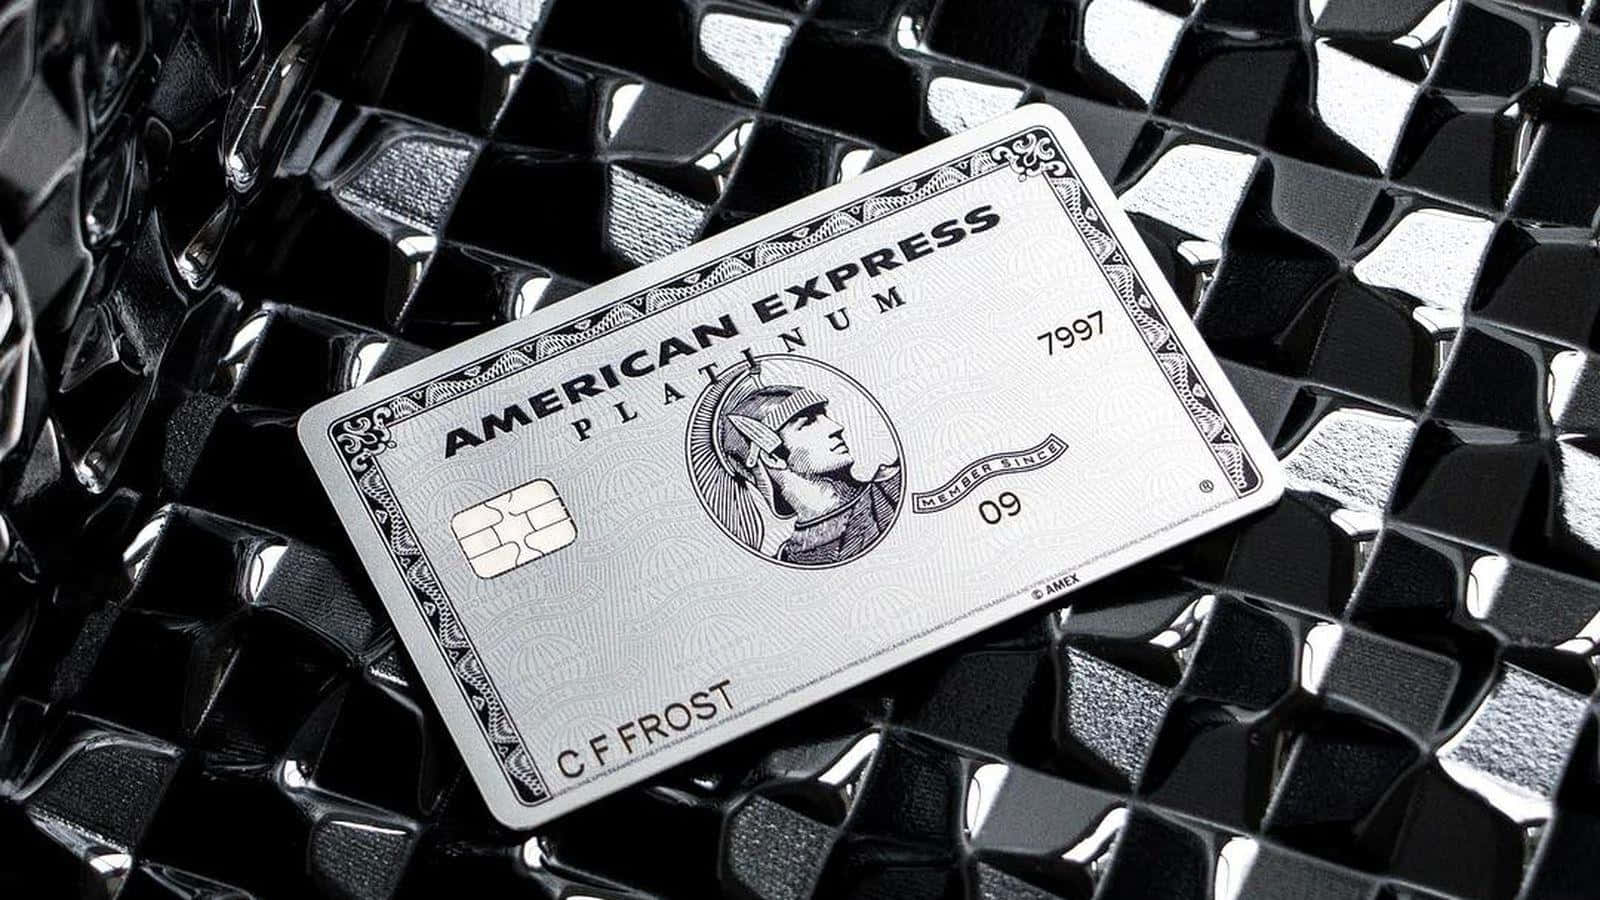 Tarjetade Crédito American Express